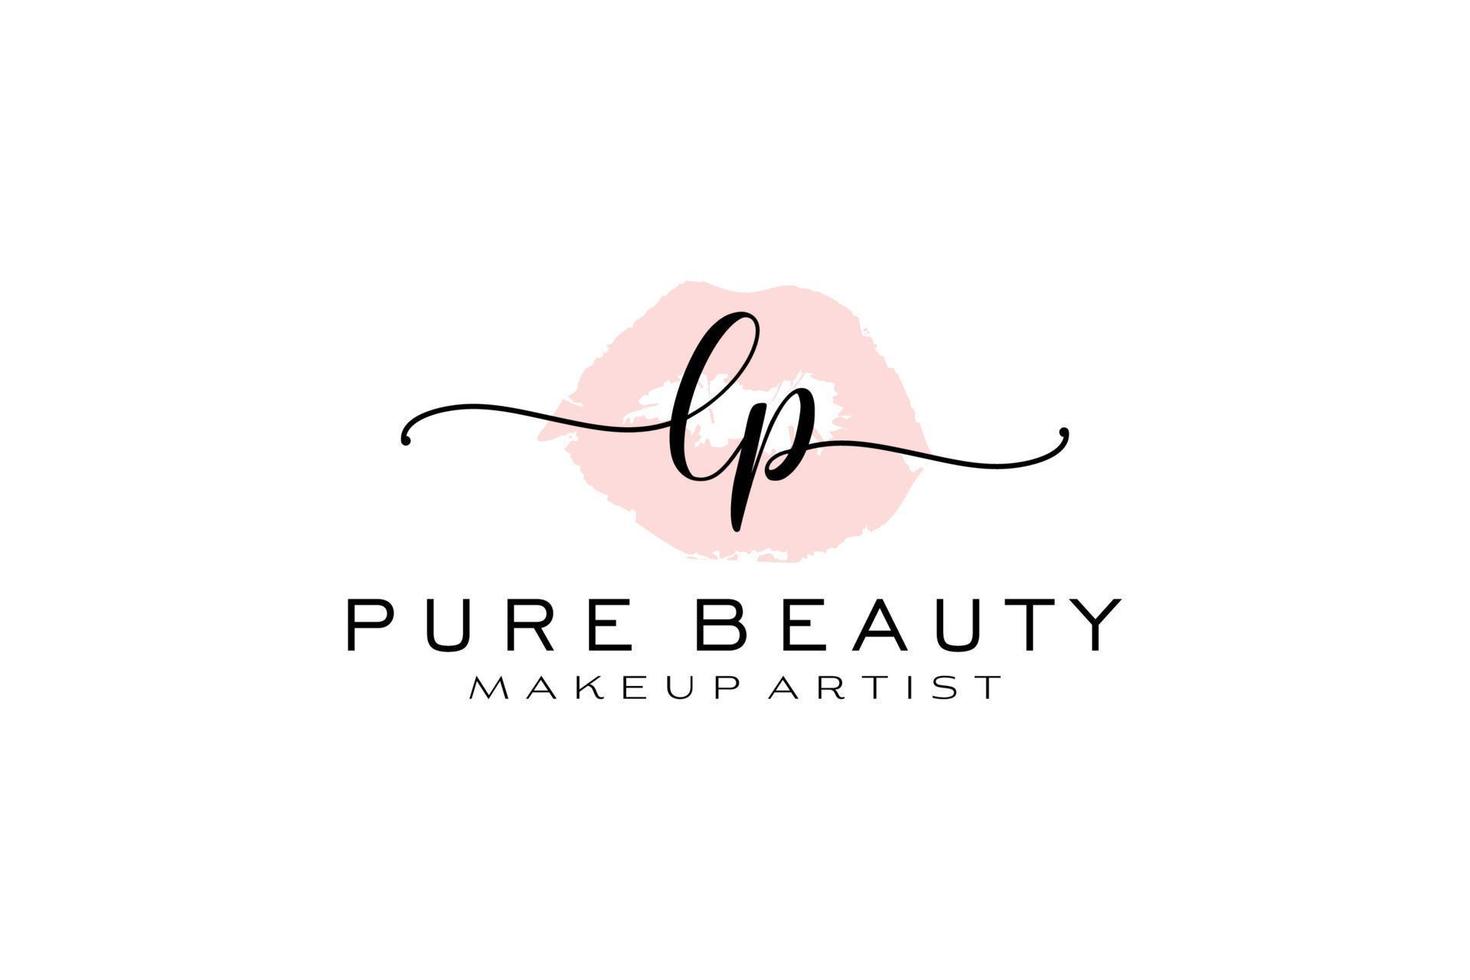 Anfangs-LP-Aquarell-Lippen vorgefertigtes Logo-Design, Logo für Make-up-Künstler-Business-Branding, Blush-Beauty-Boutique-Logo-Design, Kalligrafie-Logo mit kreativer Vorlage. vektor